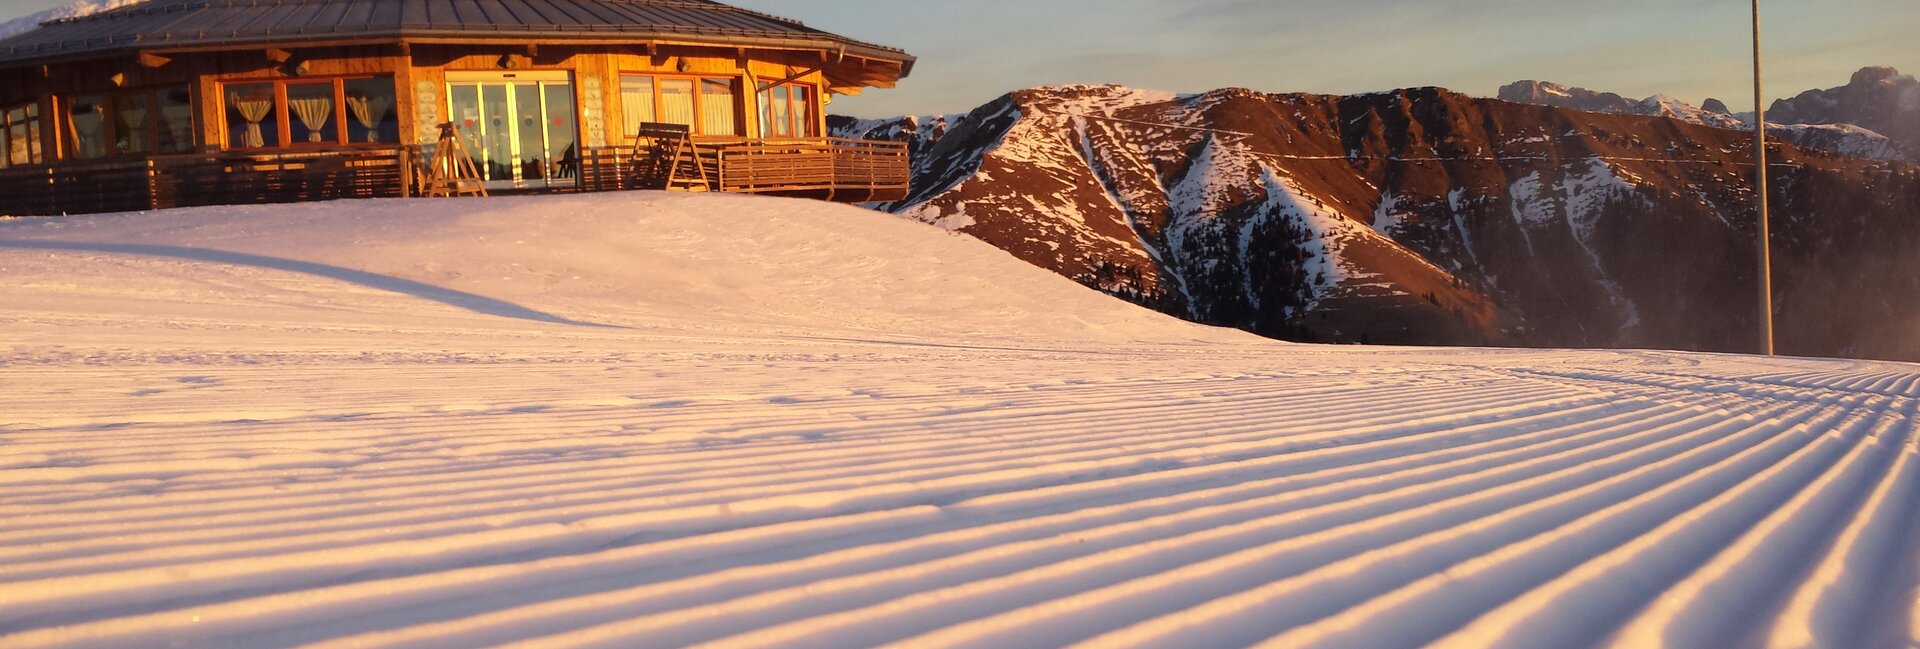 Sciare in Valsugana, skiarea per famiglie e offerte neve low coast